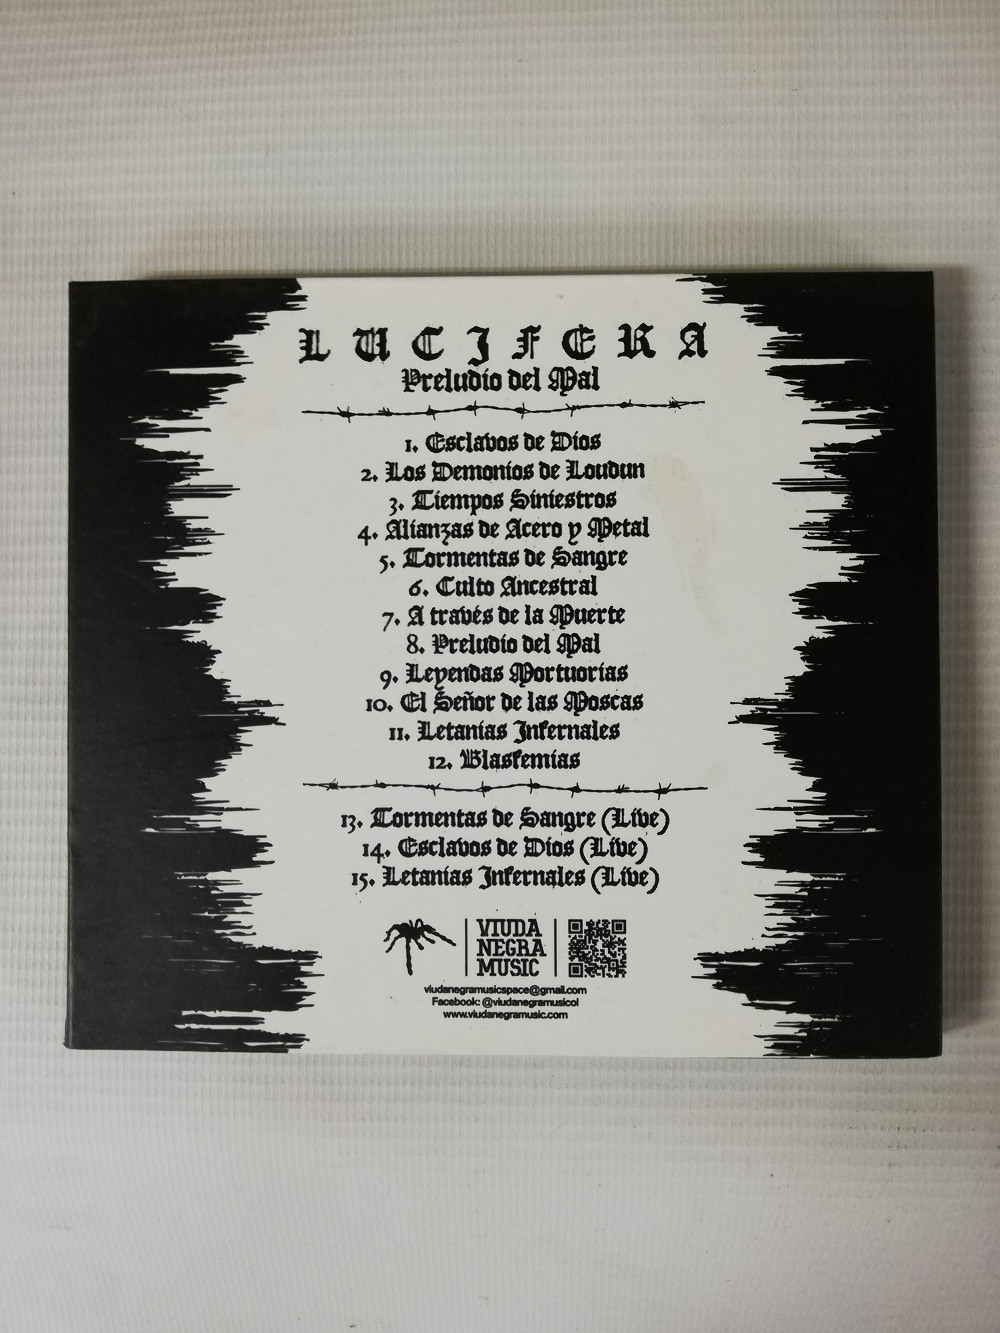 Imagen CD LUCIFERA - PRELUDIO DEL MAL 2